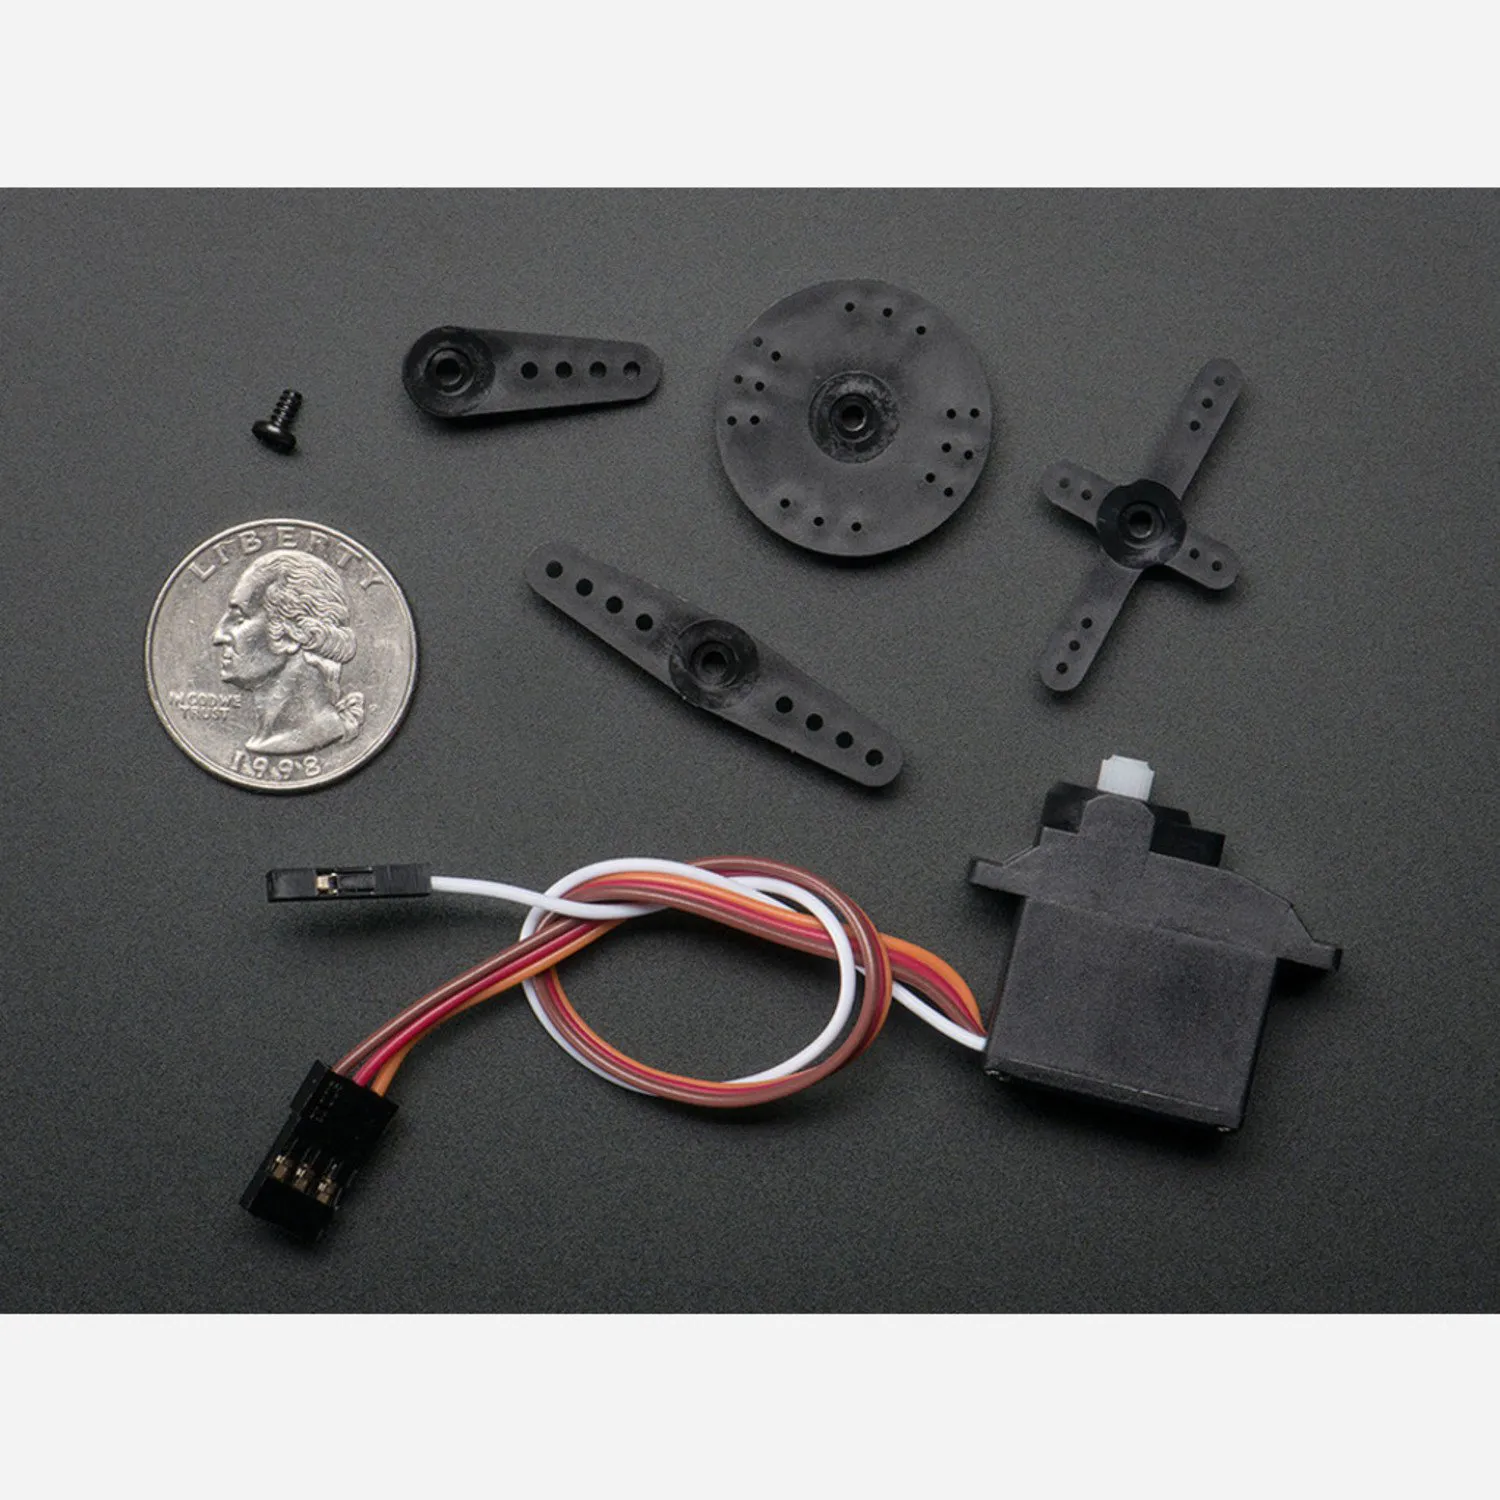 Photo of Analog Feedback Micro Servo - Plastic Gear